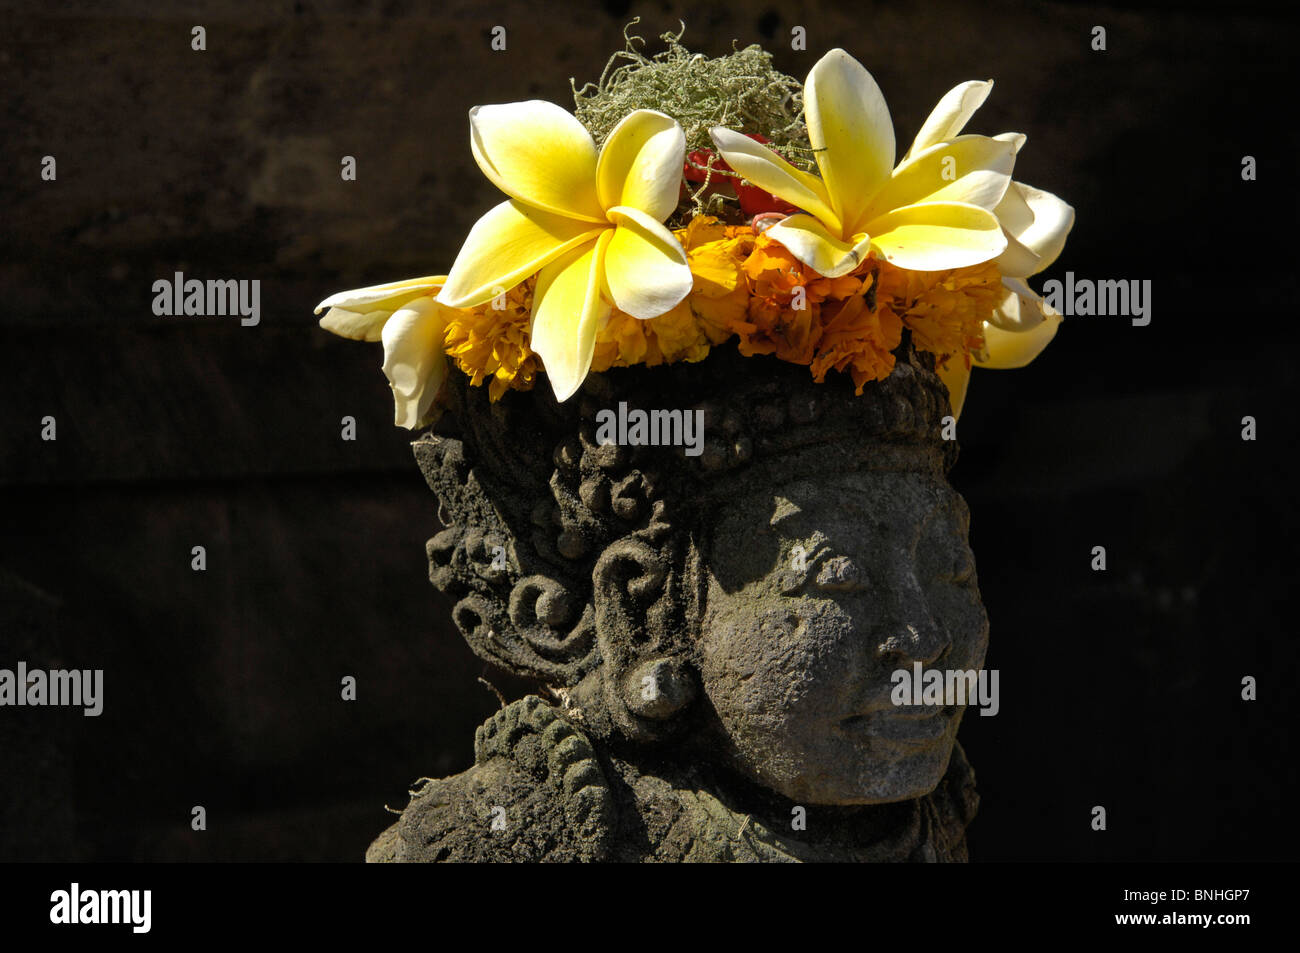 Bali Asia Indonesia travel Location Candi Dasa statue flowers figure decoration floral decorated Stock Photo